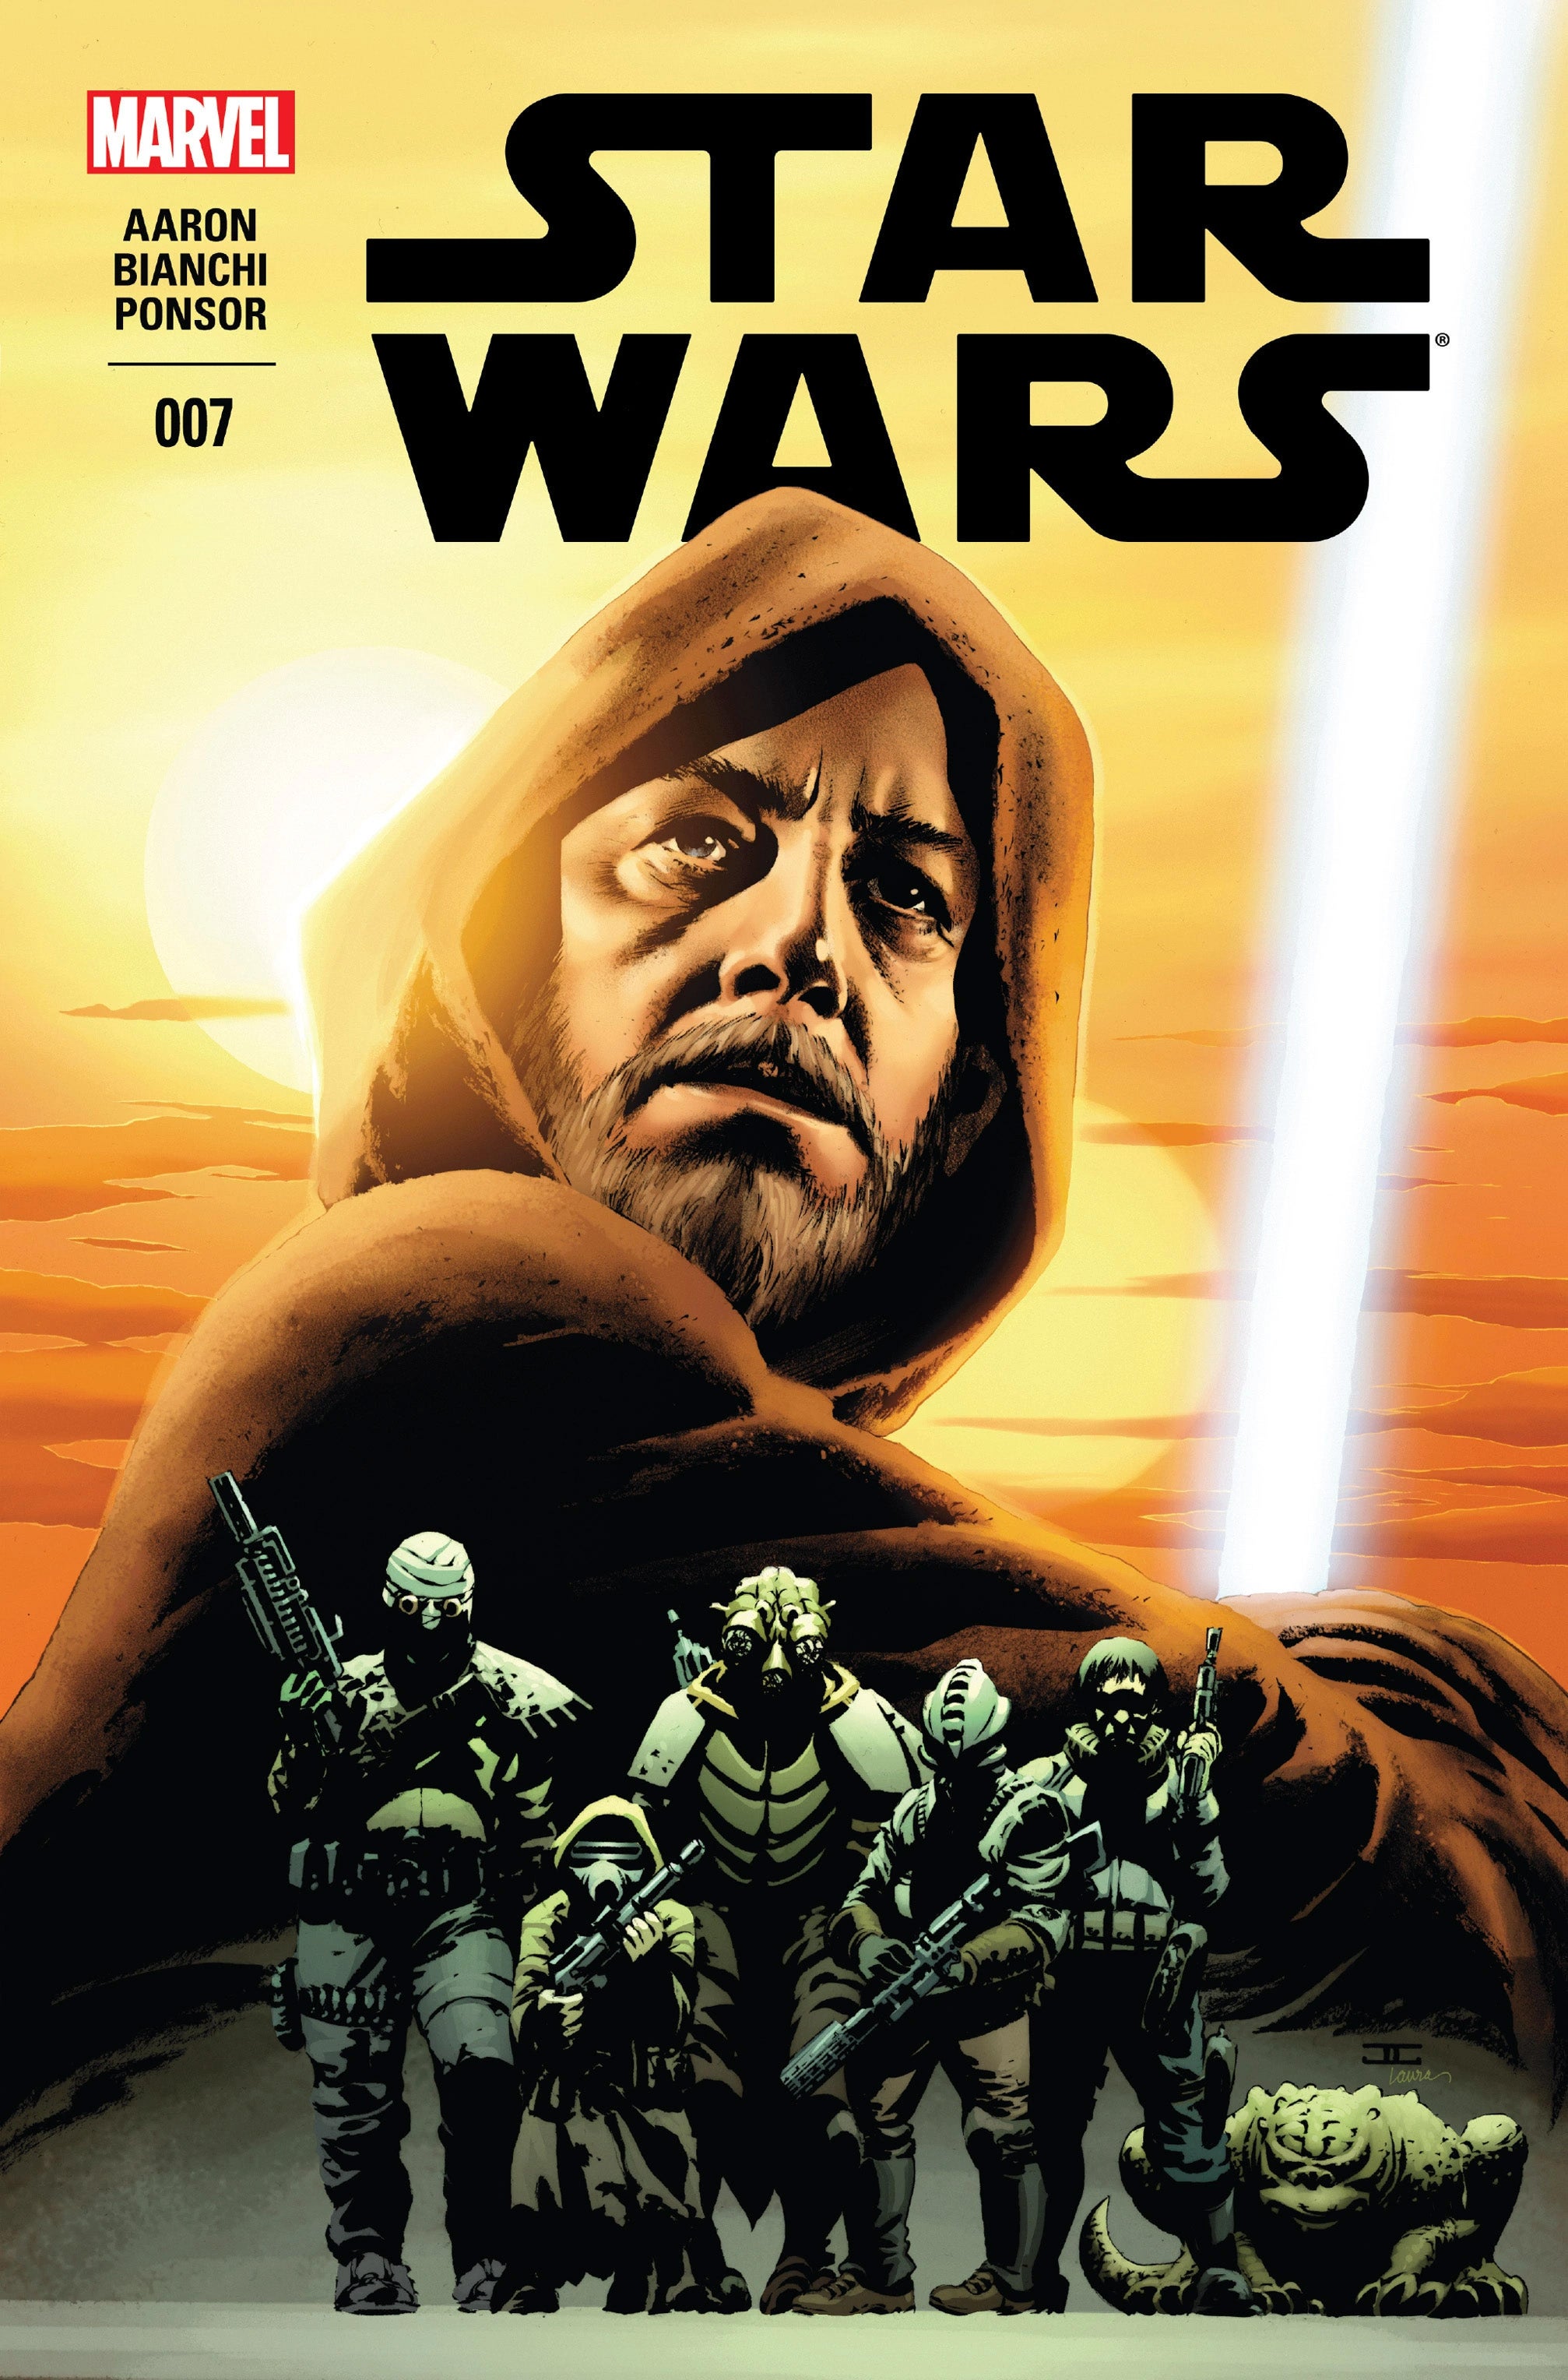 Star Wars #7 cover with a greying Obi-Wan Kenobi